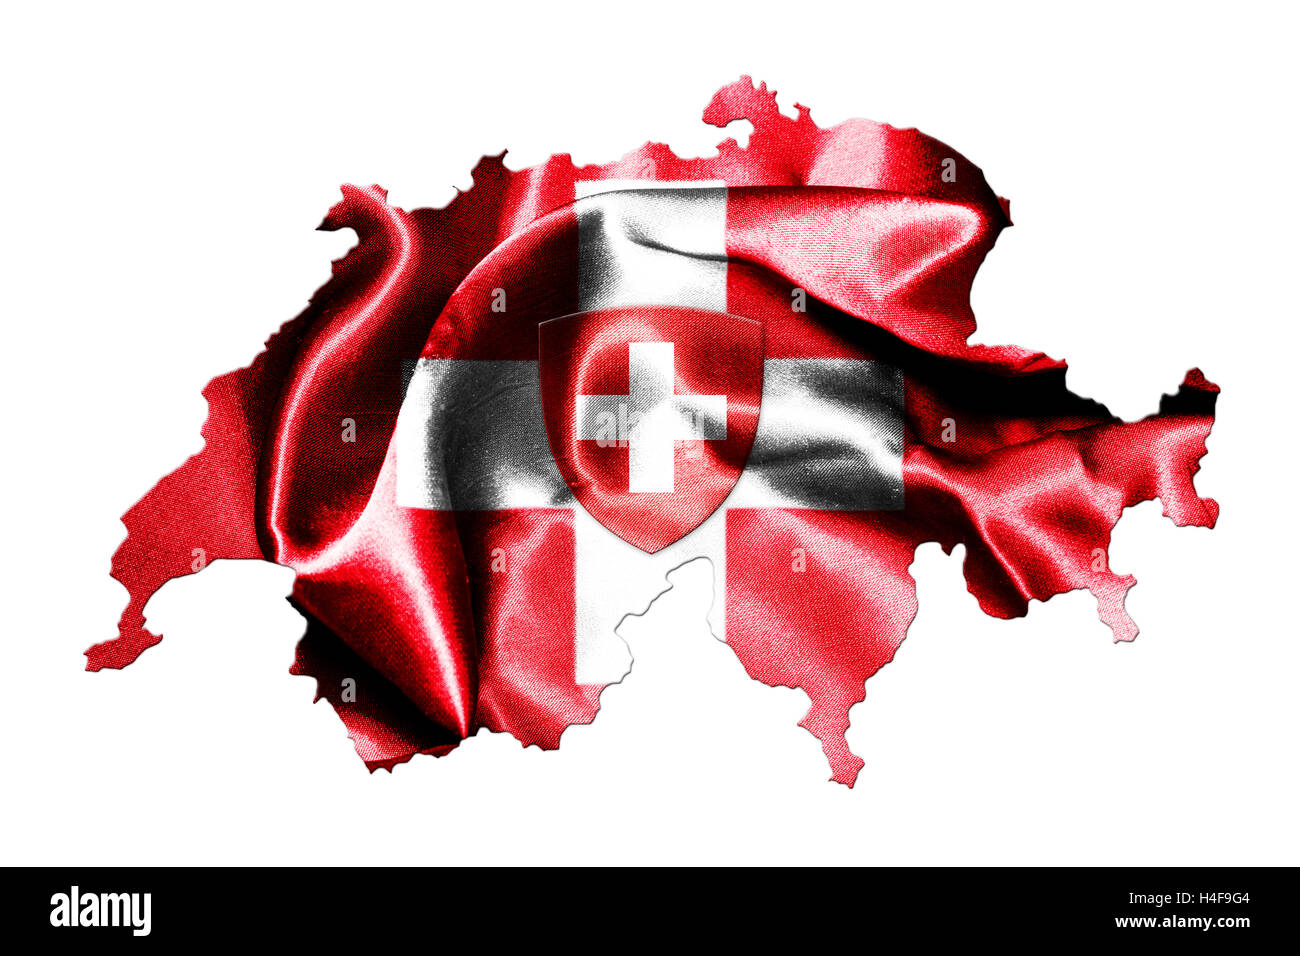 Map Of Switzerland And Flag On White Background Stock Photo